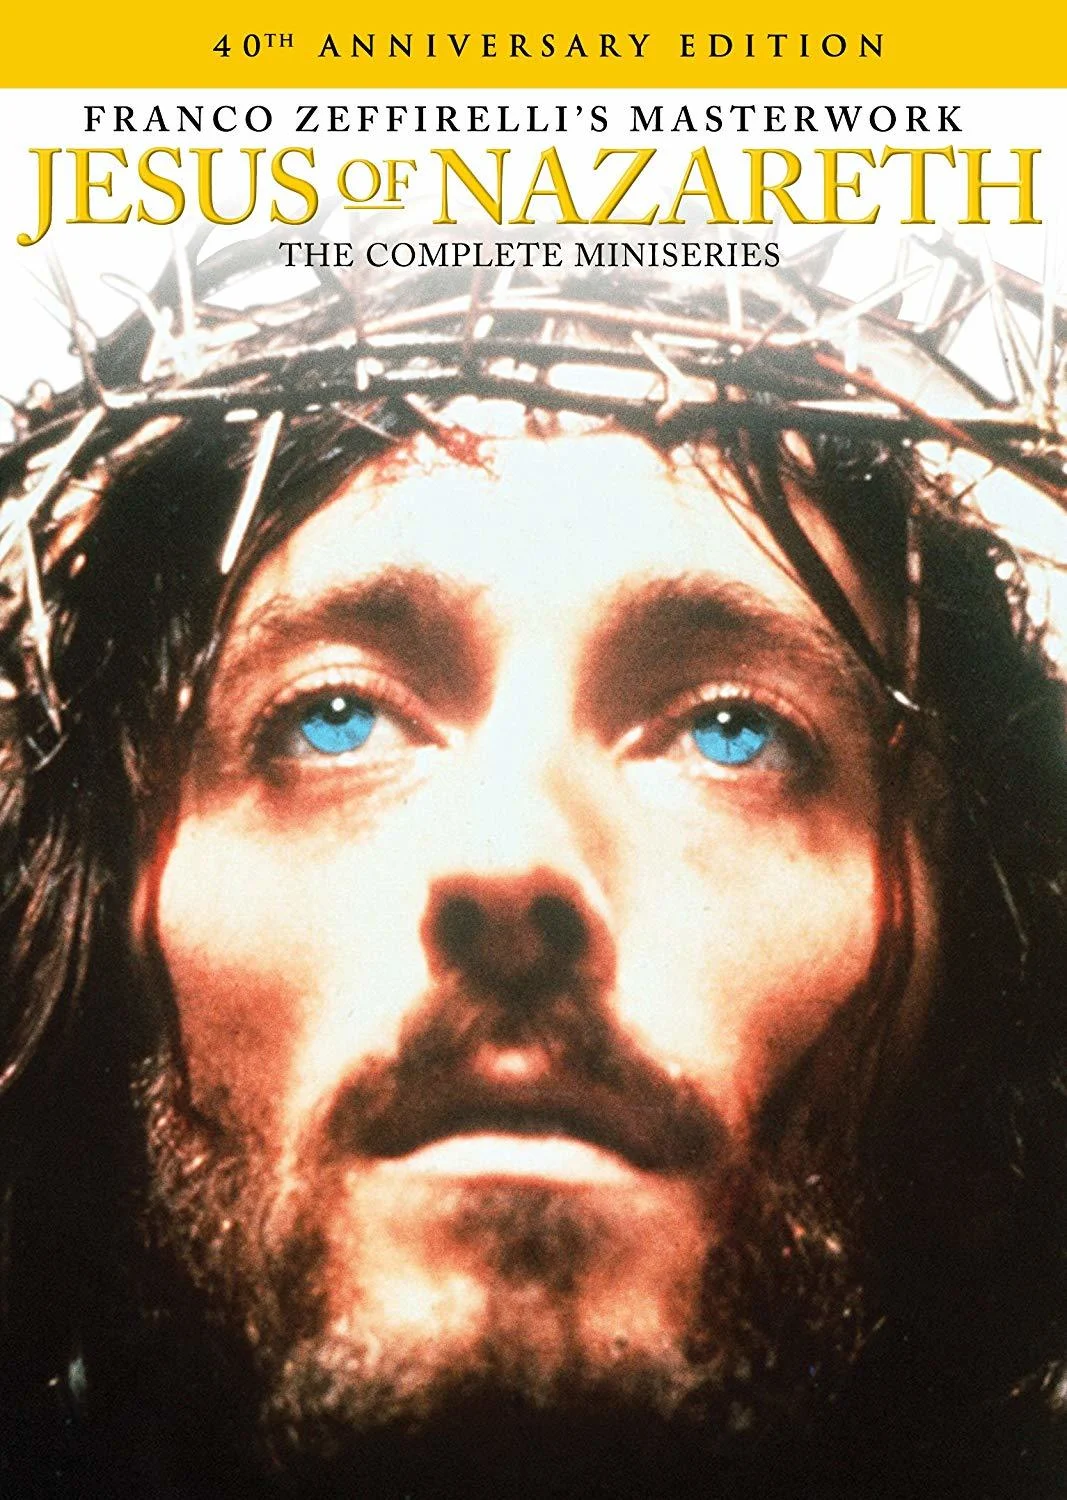 Jesus of Nazareth: 40th Anniversary Edition (DVD) on MovieShack